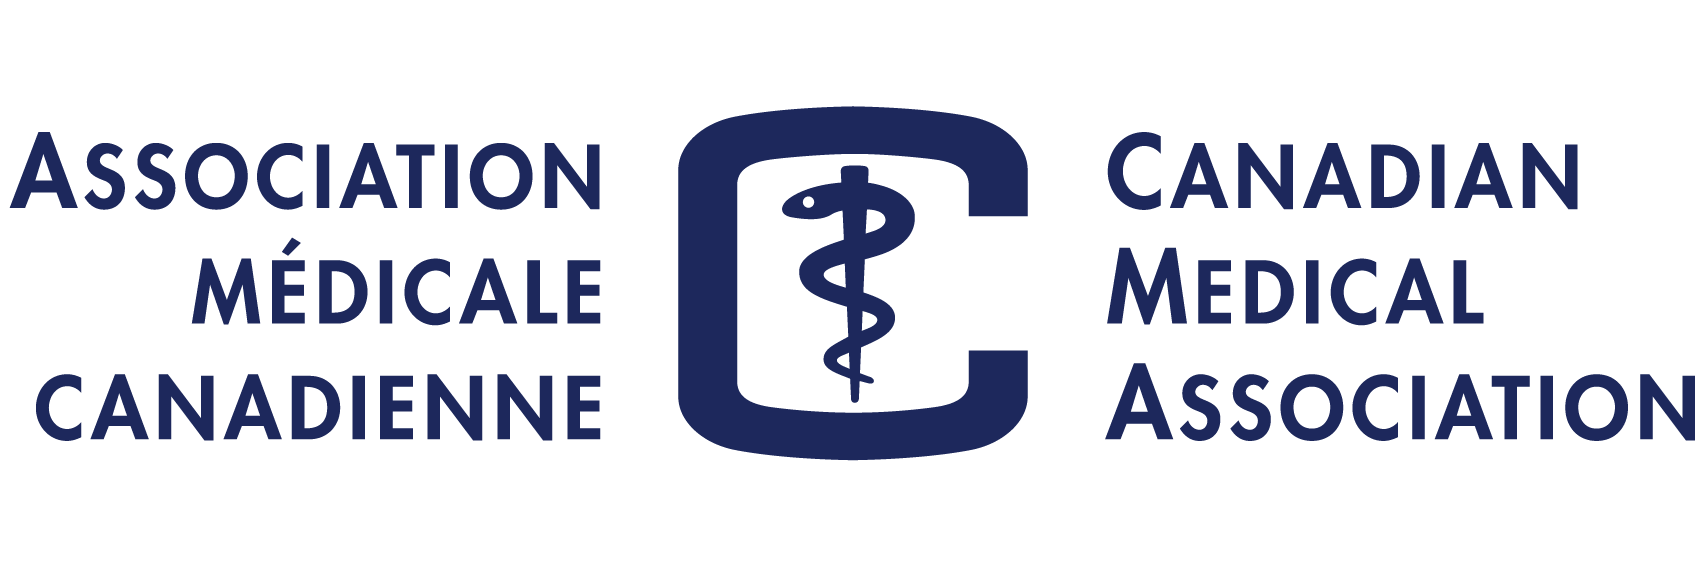 Association médicale canadienne logo